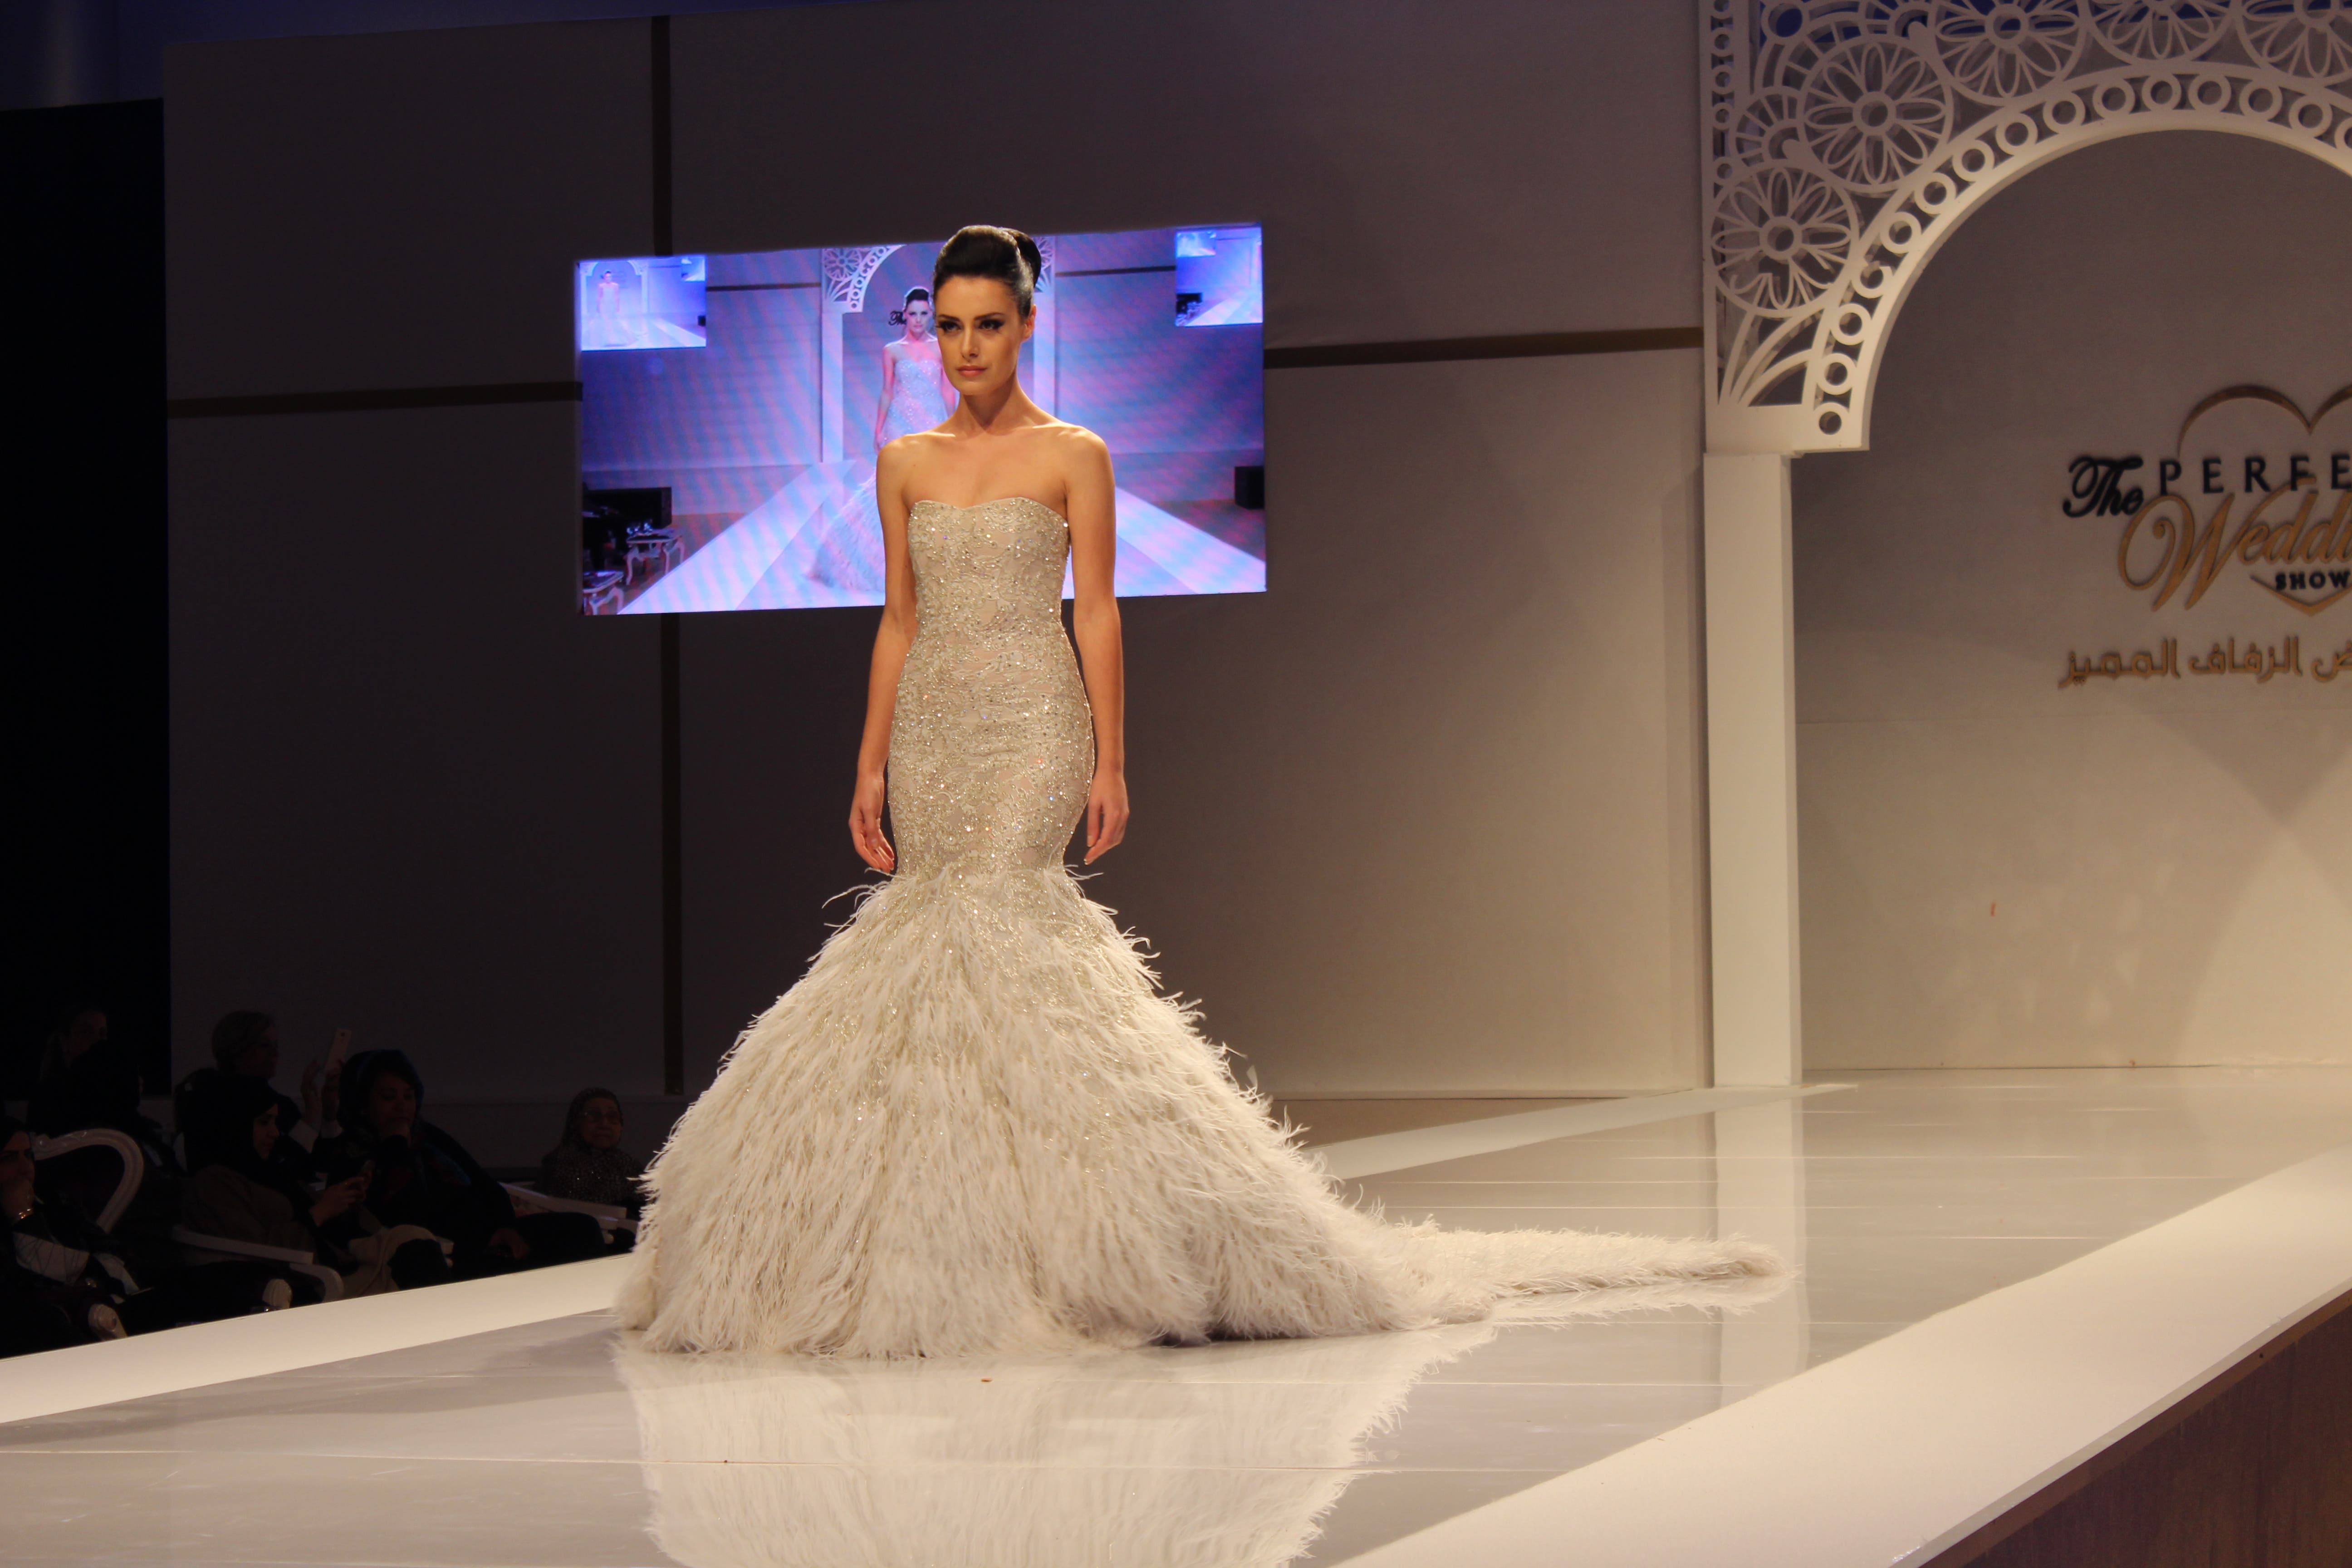 A display of Zakhem’s bridal gowns at the Perfect Wedding Show. (Shounaz Meky/Al Arabiya News)